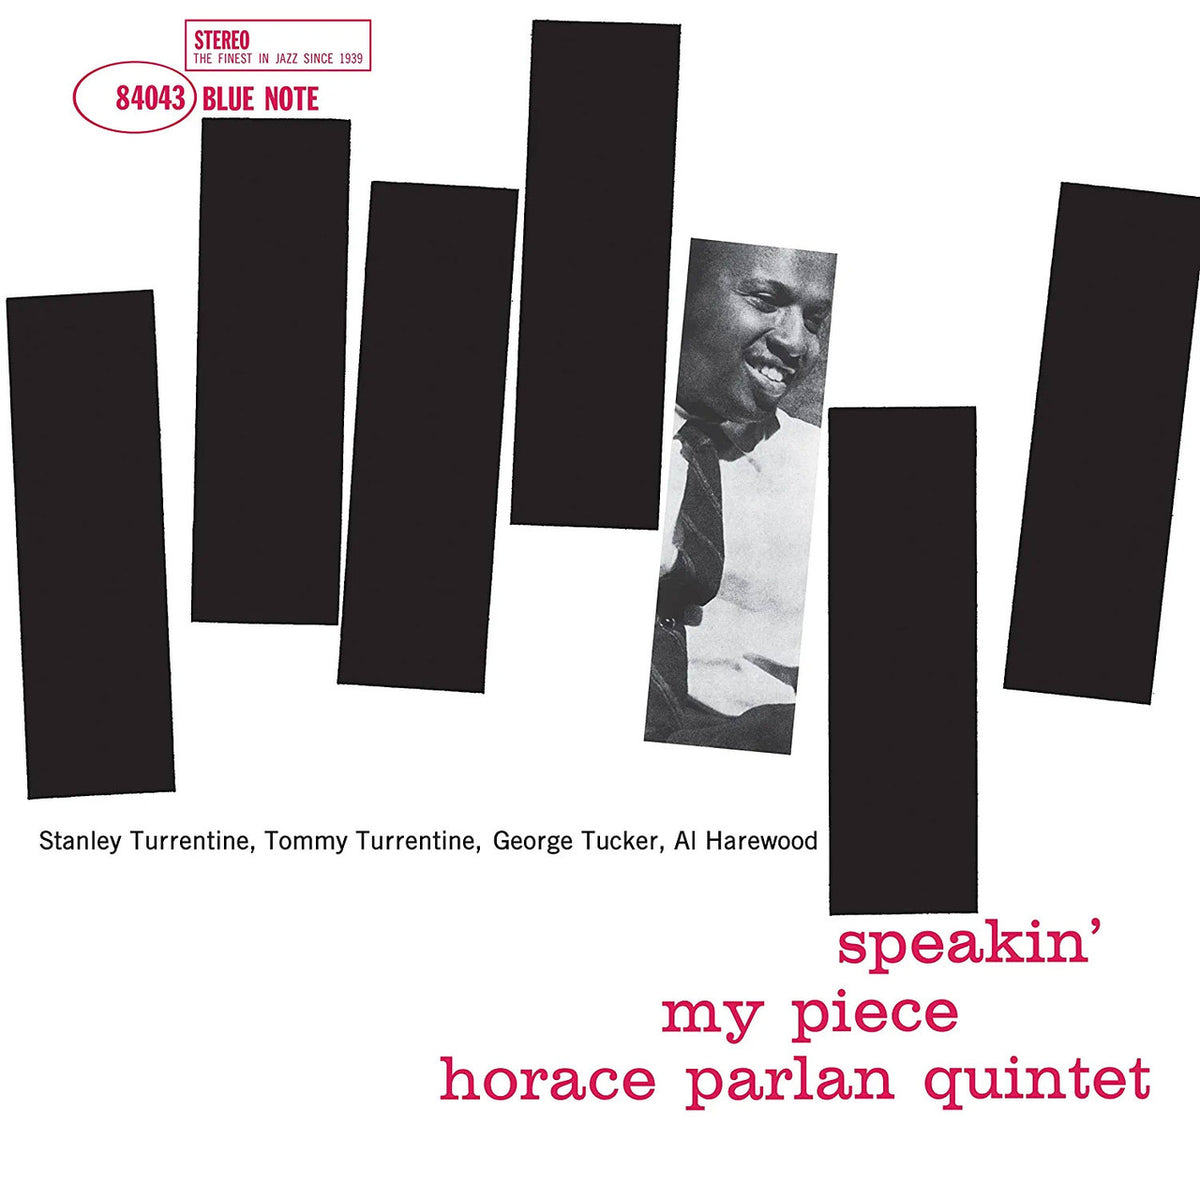 Horace Parlan Quintet - Speakin' My Piece LP (180g Classic Vinyl Series)